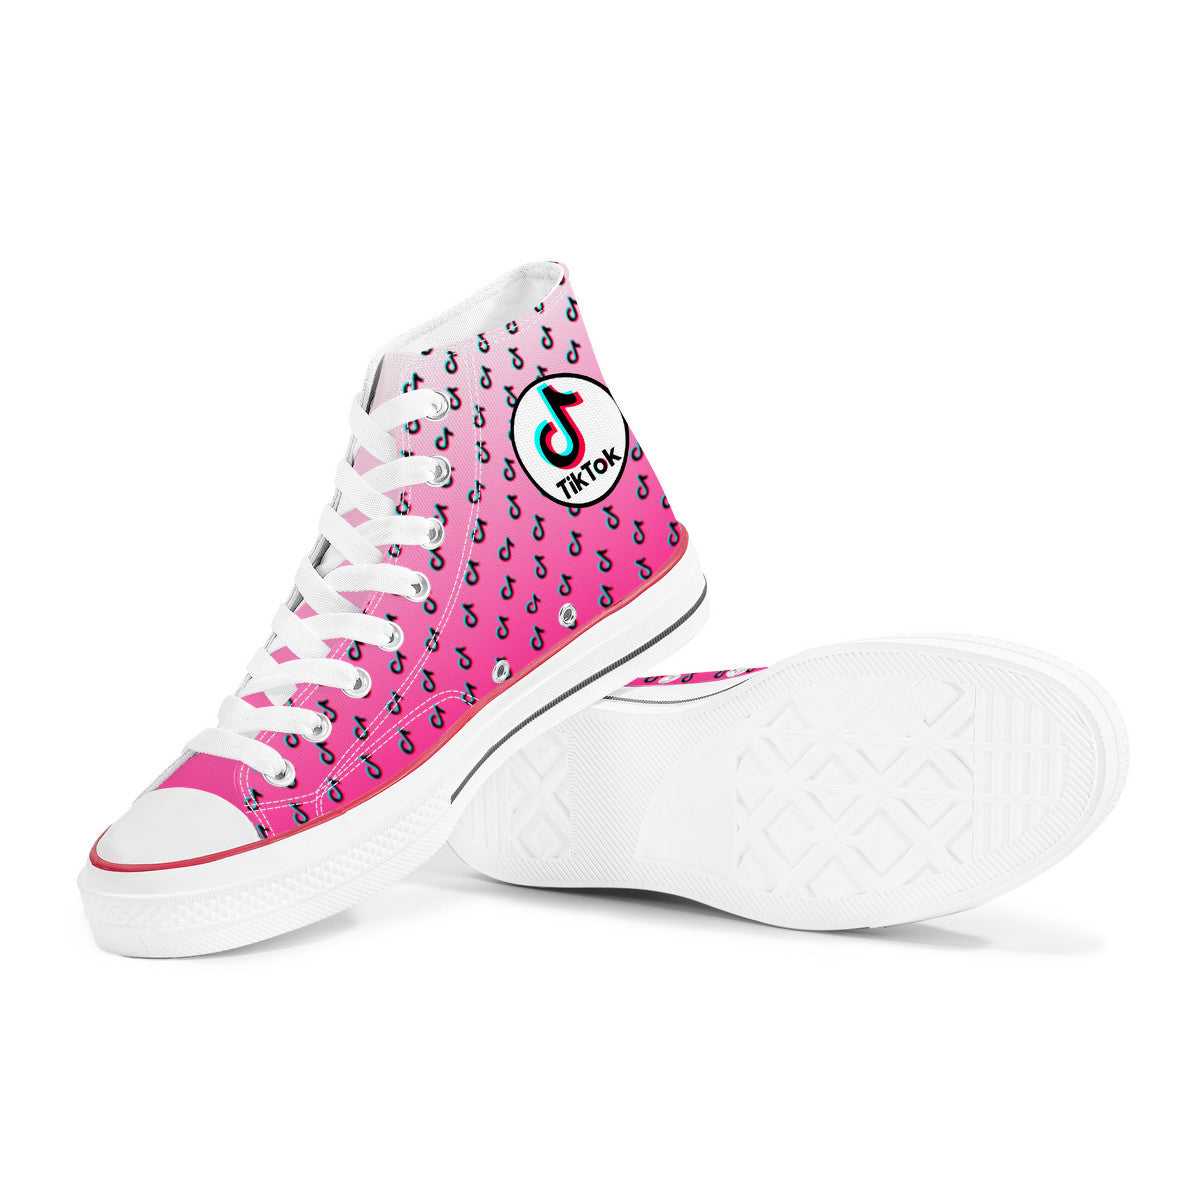 TikTok High Top Canvas Shoes - Pink TikTok Sneakers - SD-style-shop